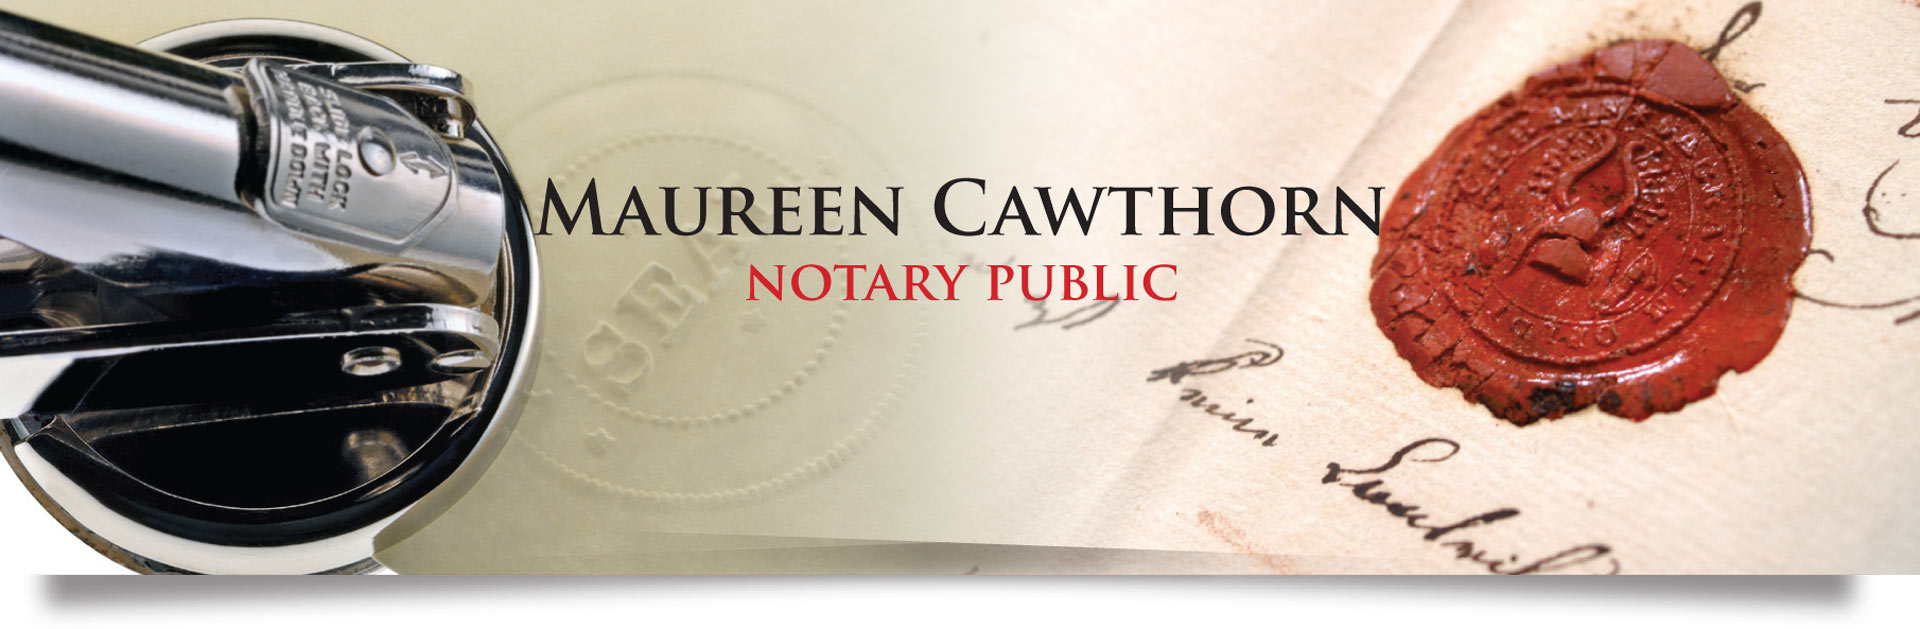 notary public halifax